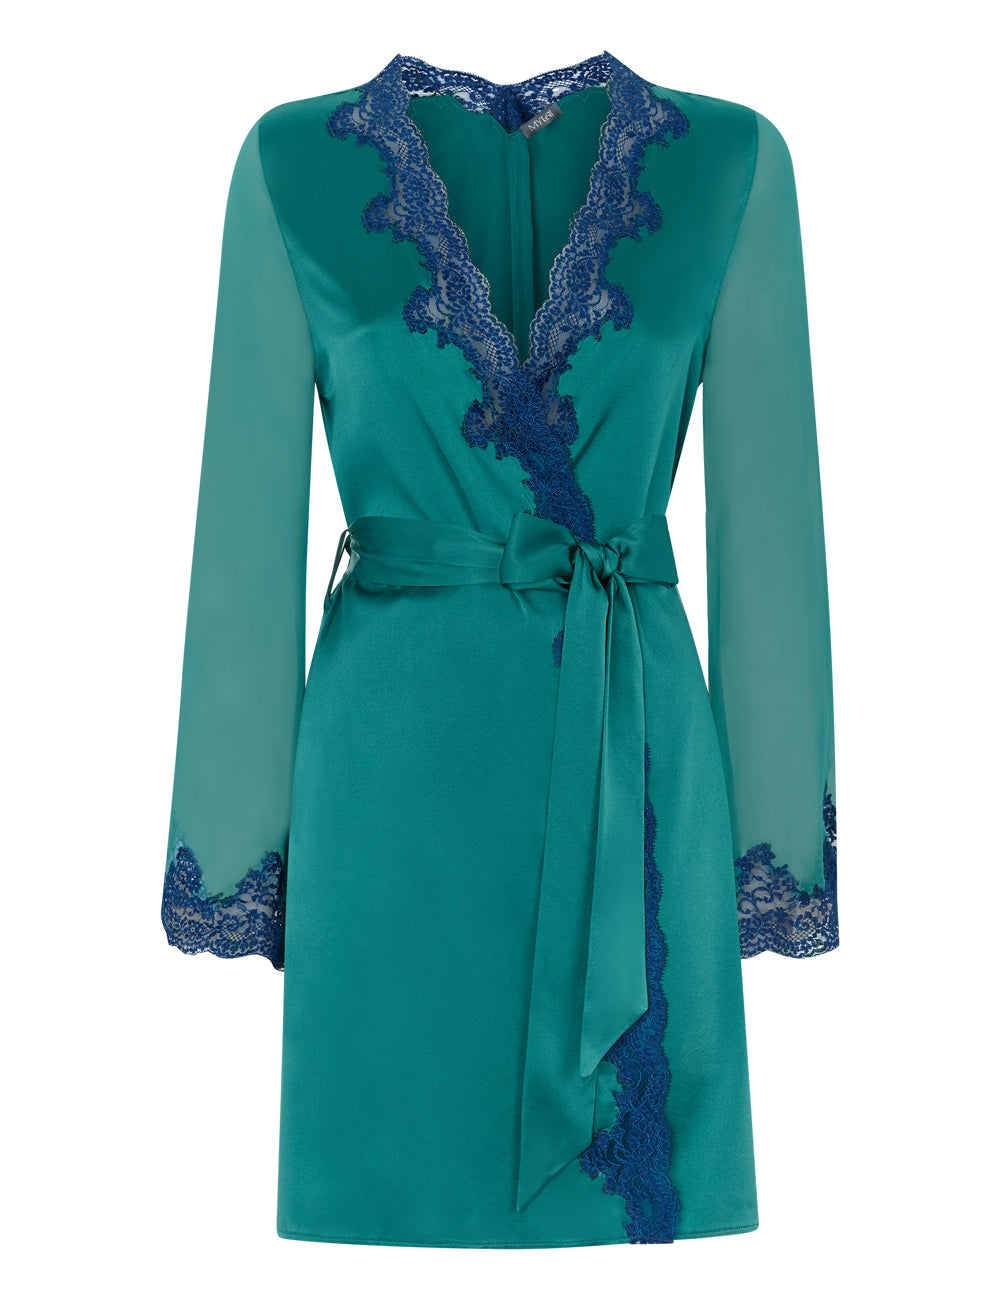 MYLA Heritage Silk Short Robe - Emerald/Ink Blue - XS - S - M - L - XL